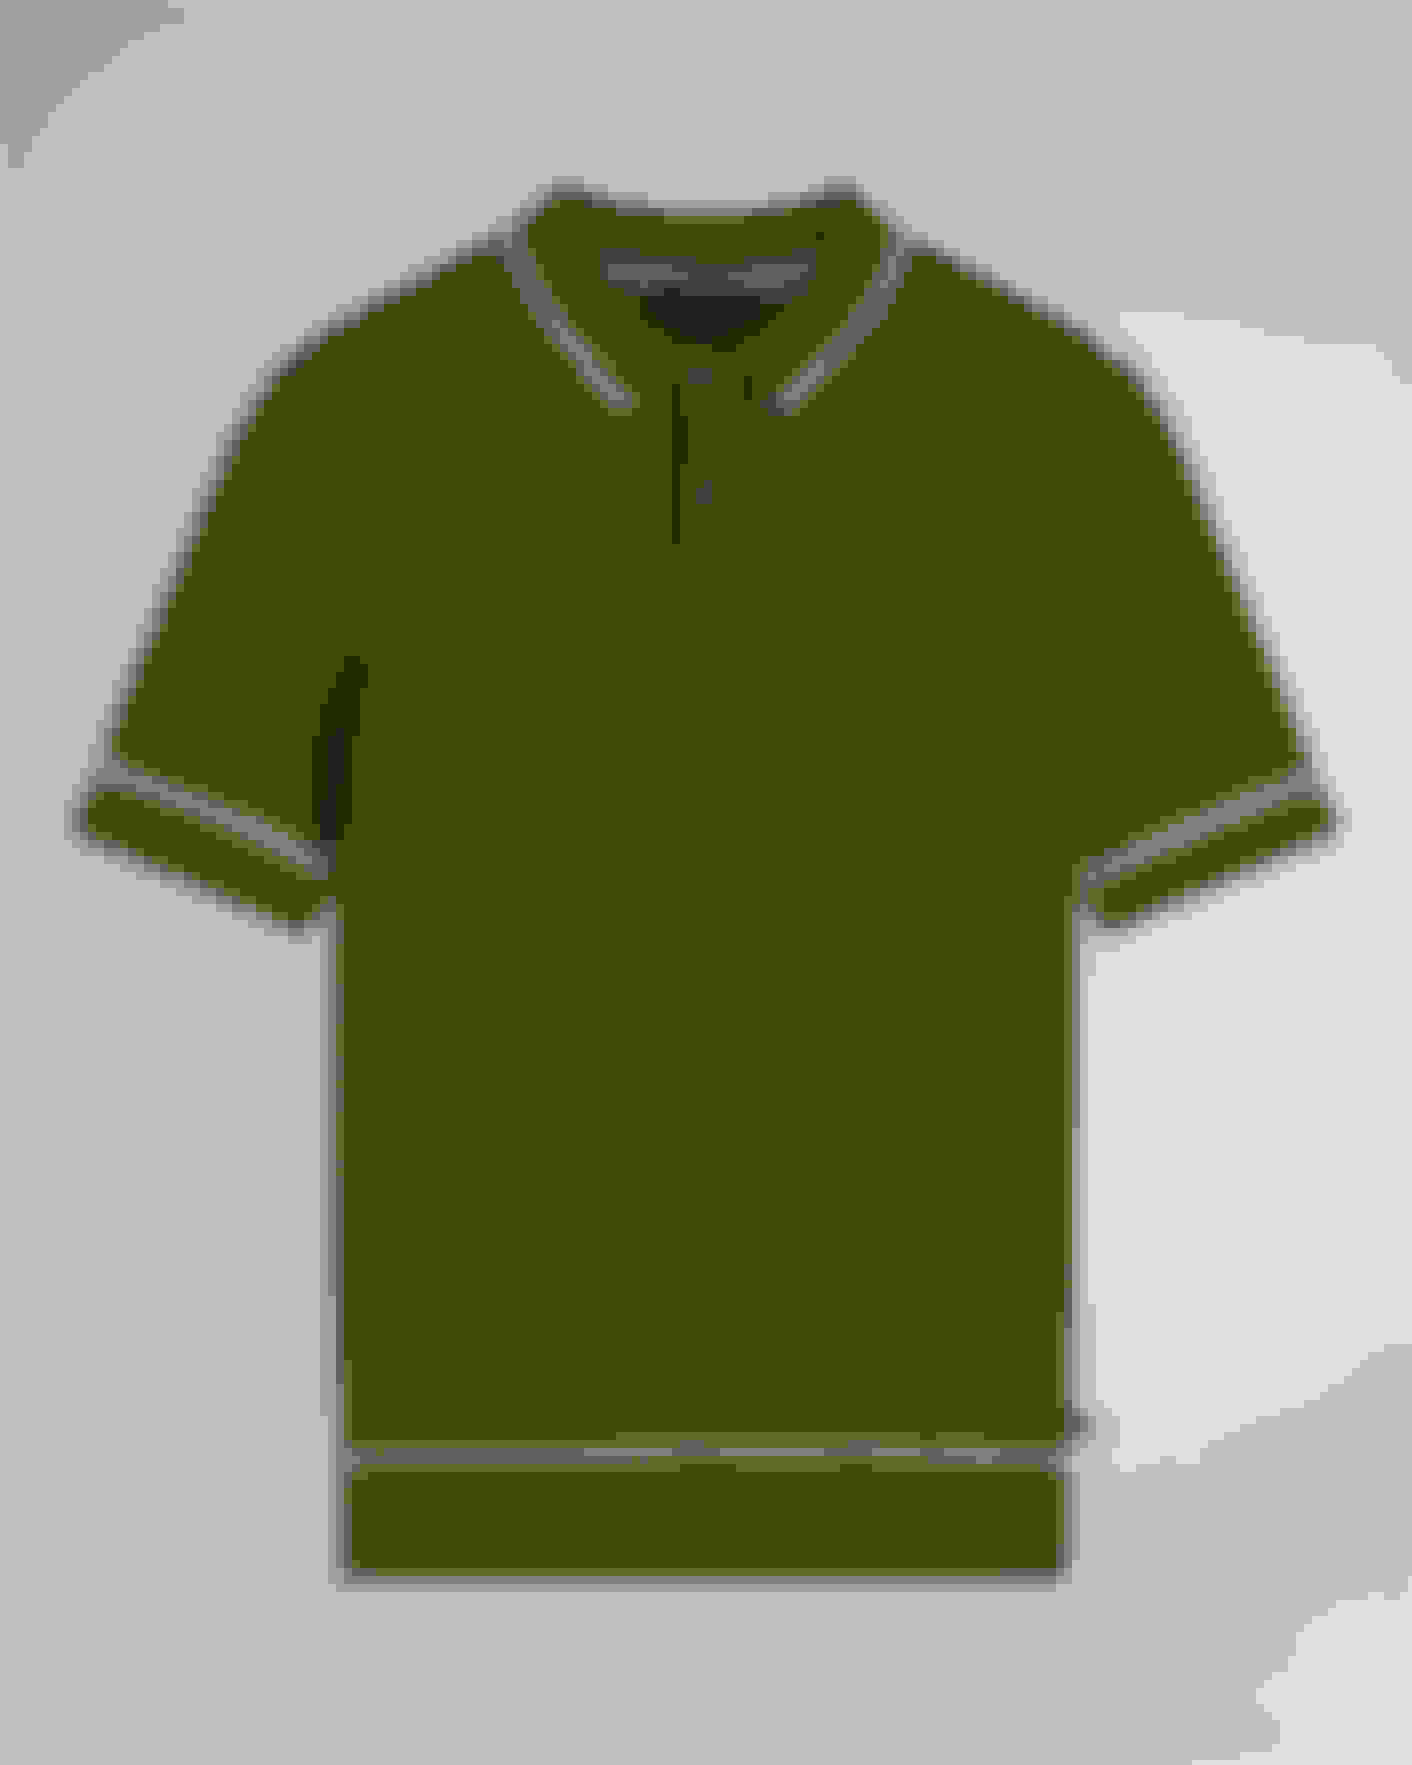 Luxury Olive Cut Pattern Polo Shirt